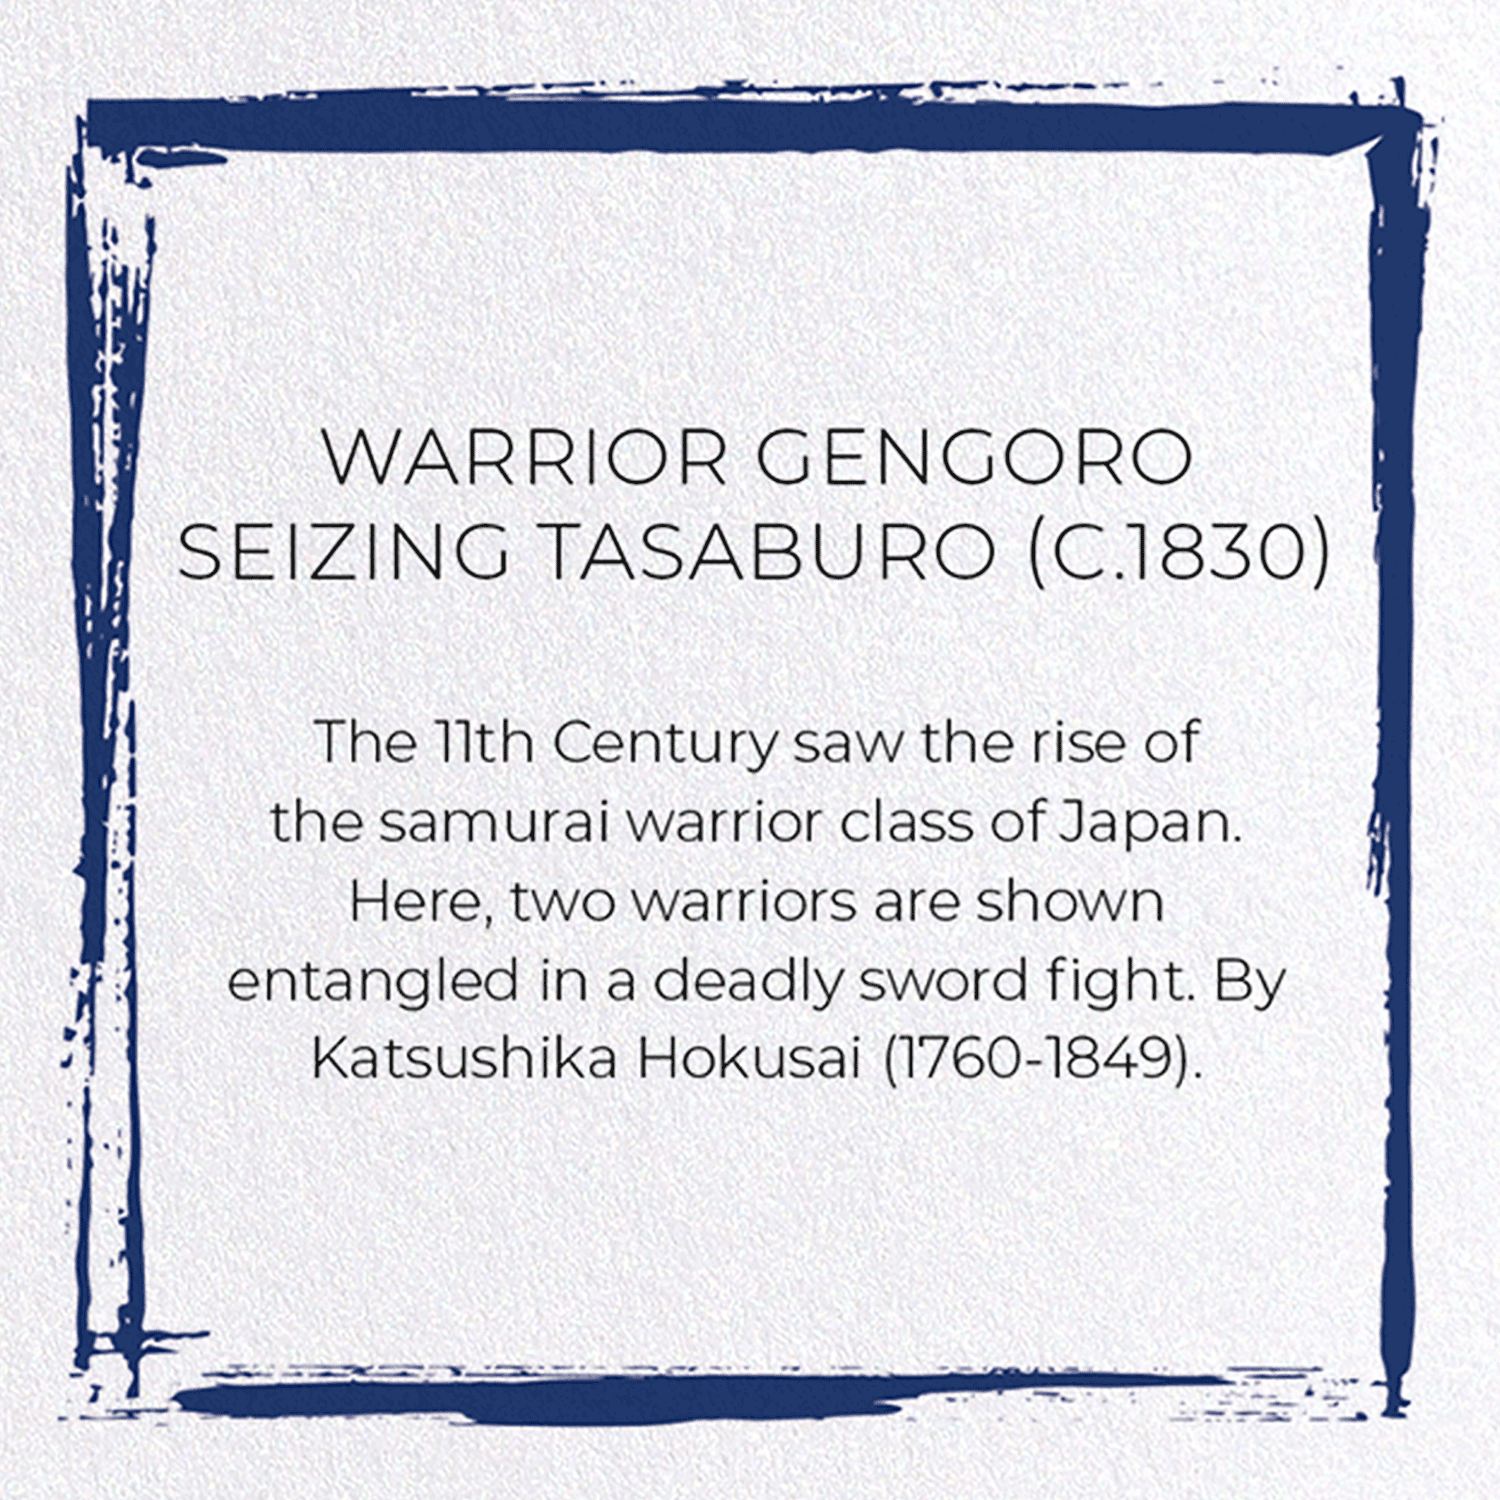 WARRIOR GENGORO SEIZING TASABURO (C.1830): Japanese Greeting Card